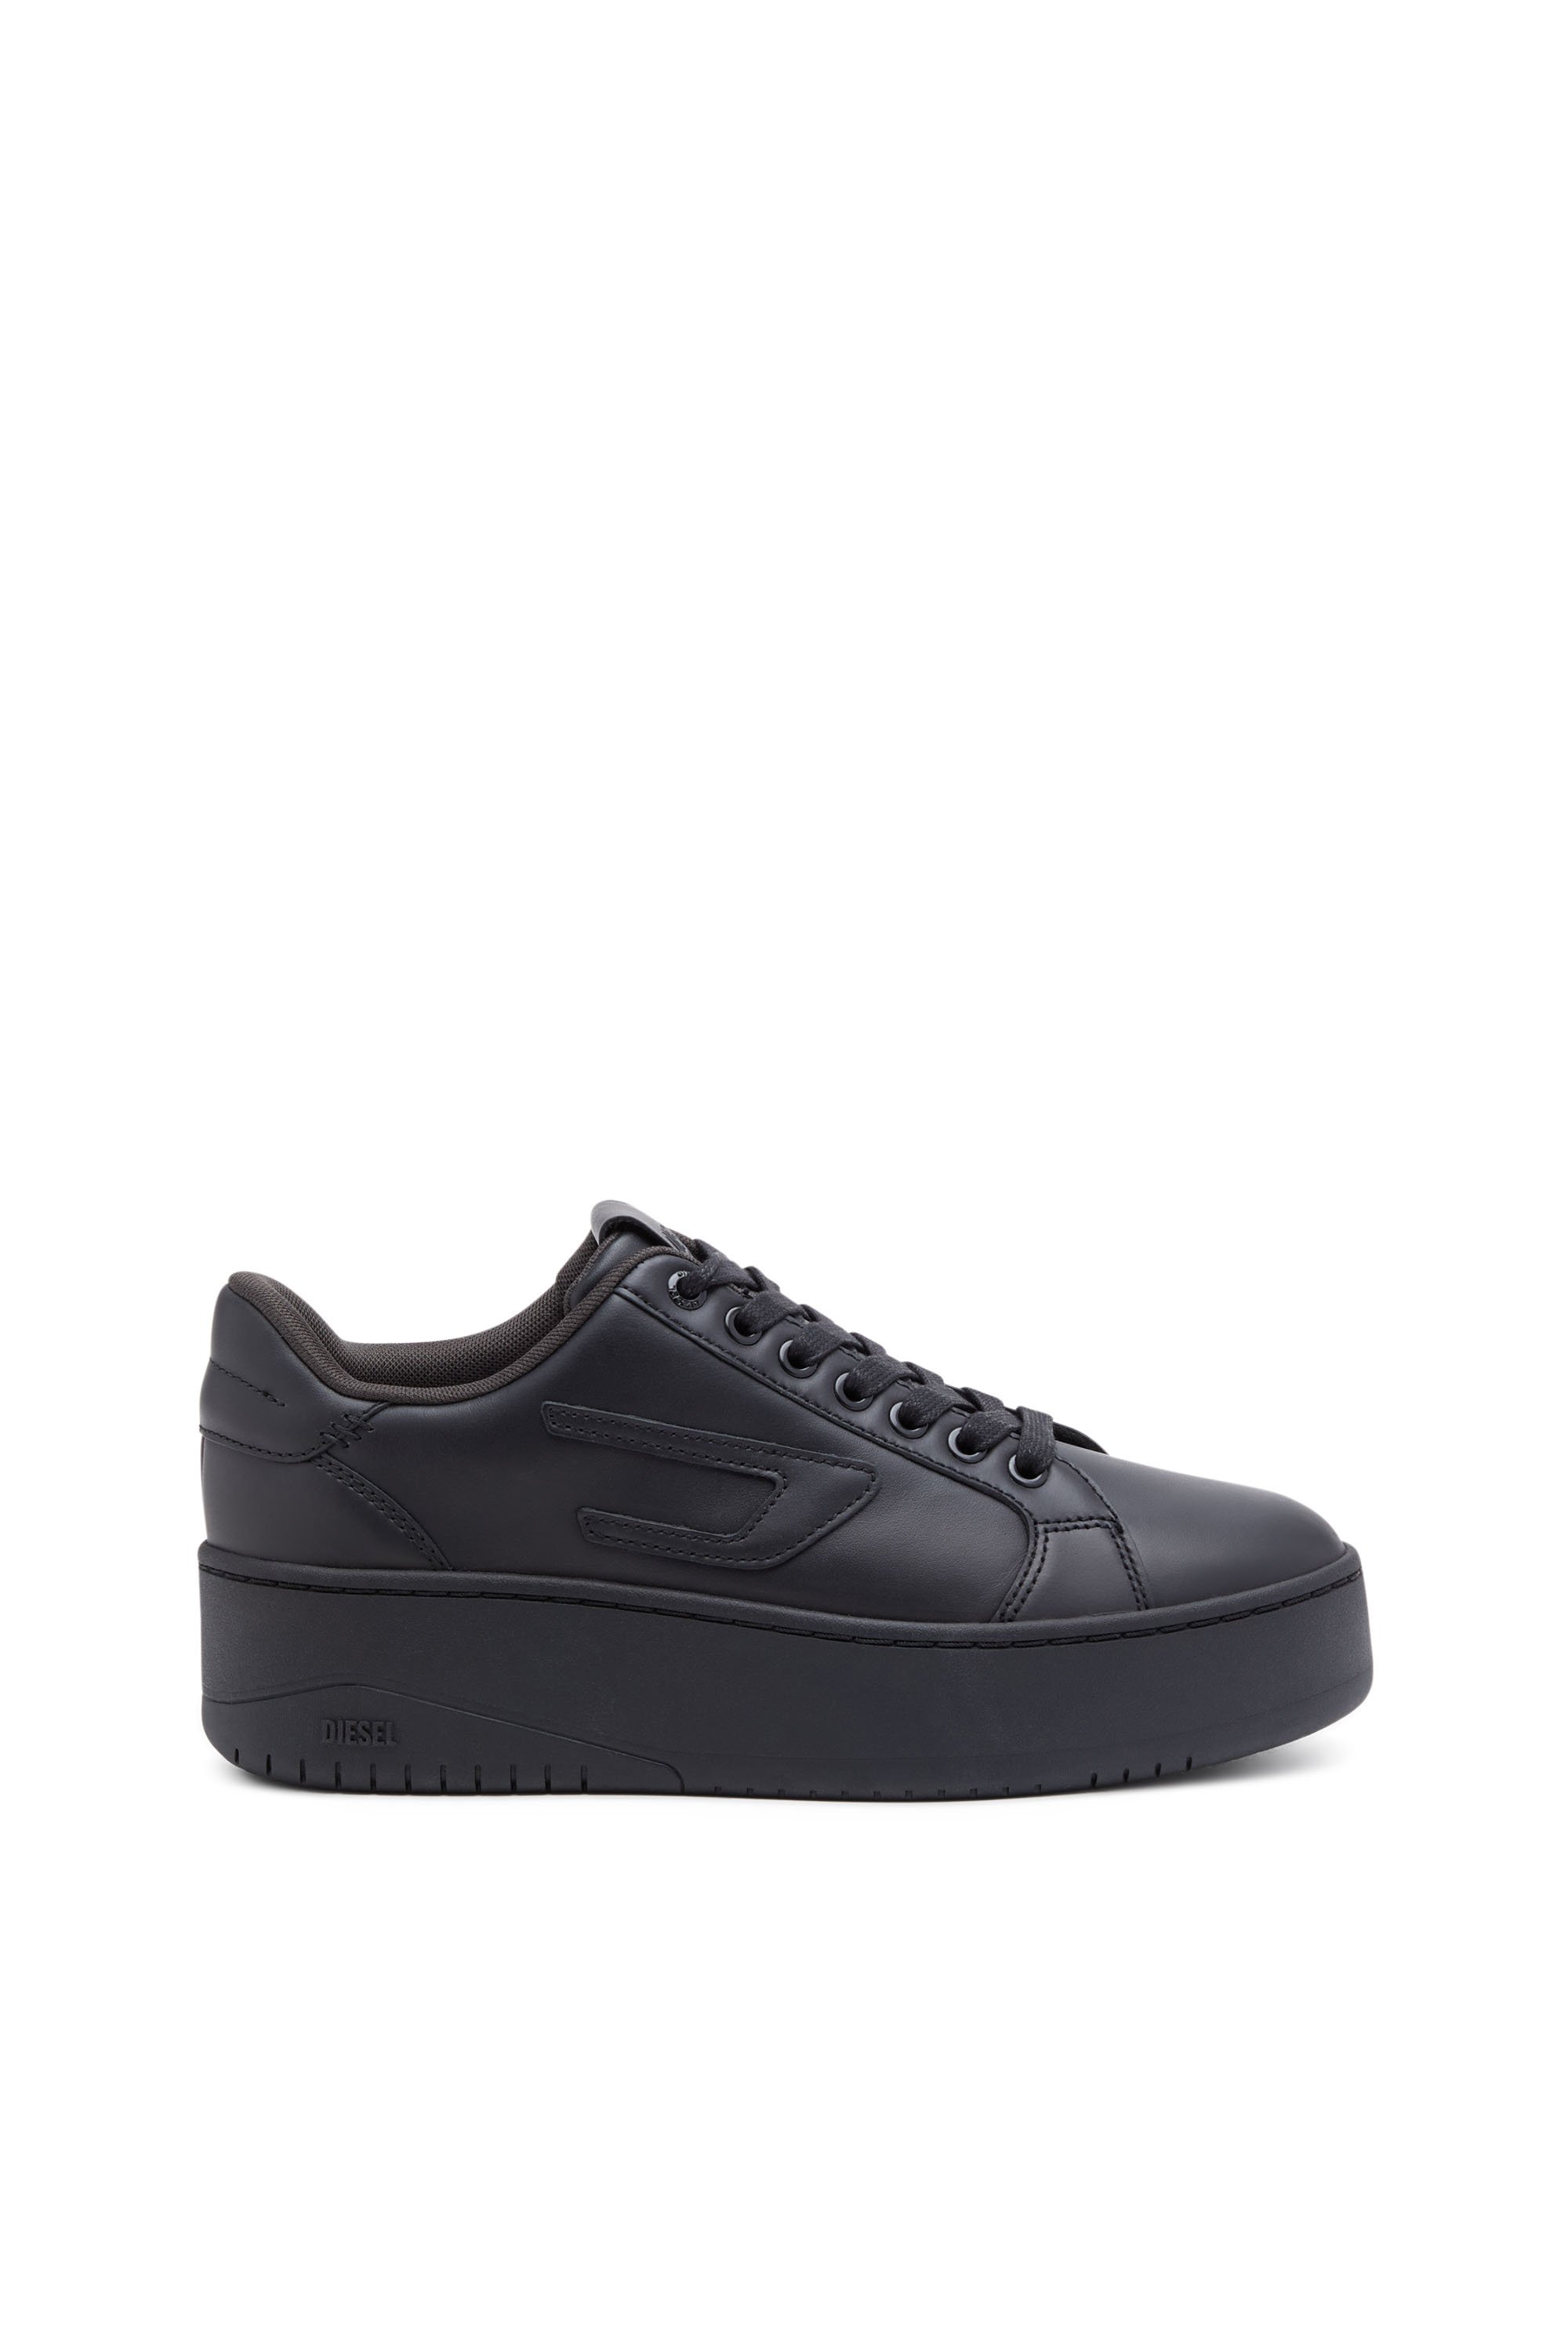 Diesel - S-Athene Bold X - Flatform sneakers in leather - Sneakers - Woman - Black